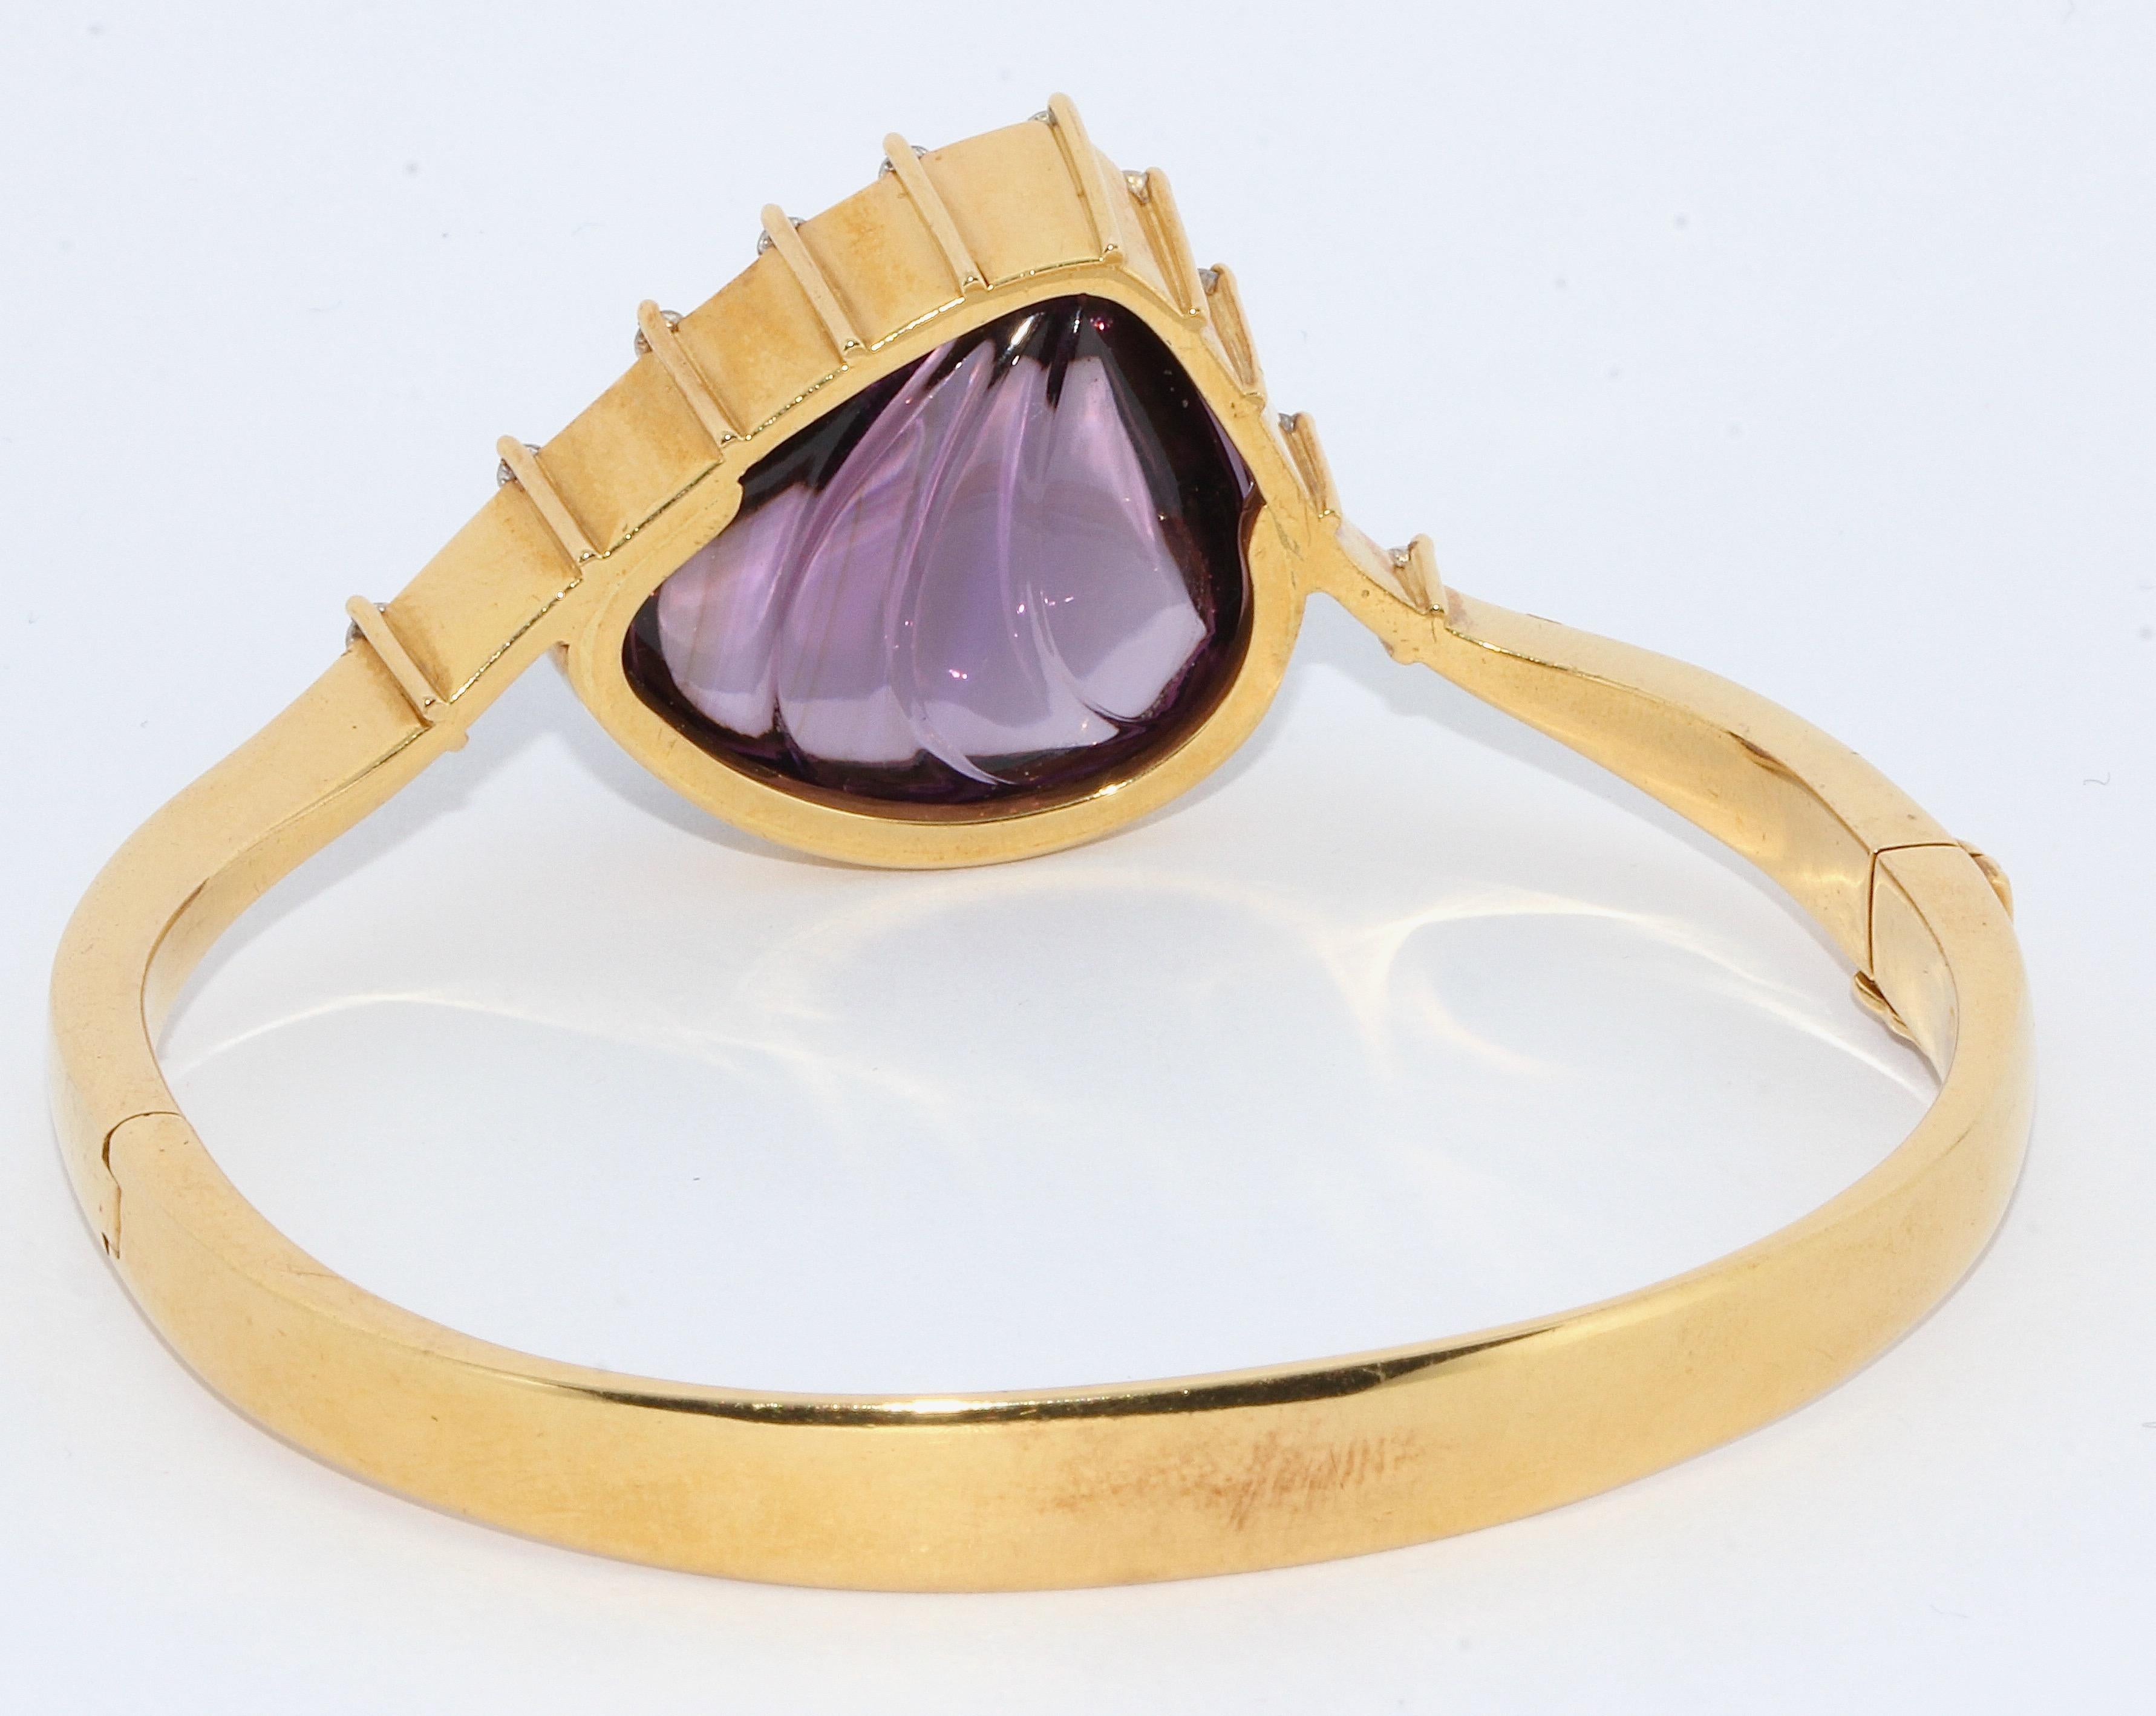 18 Karat Gold Bangle, Bracelet, Set with Large Amethyst and Diamonds. Cadeaux. For Sale 1